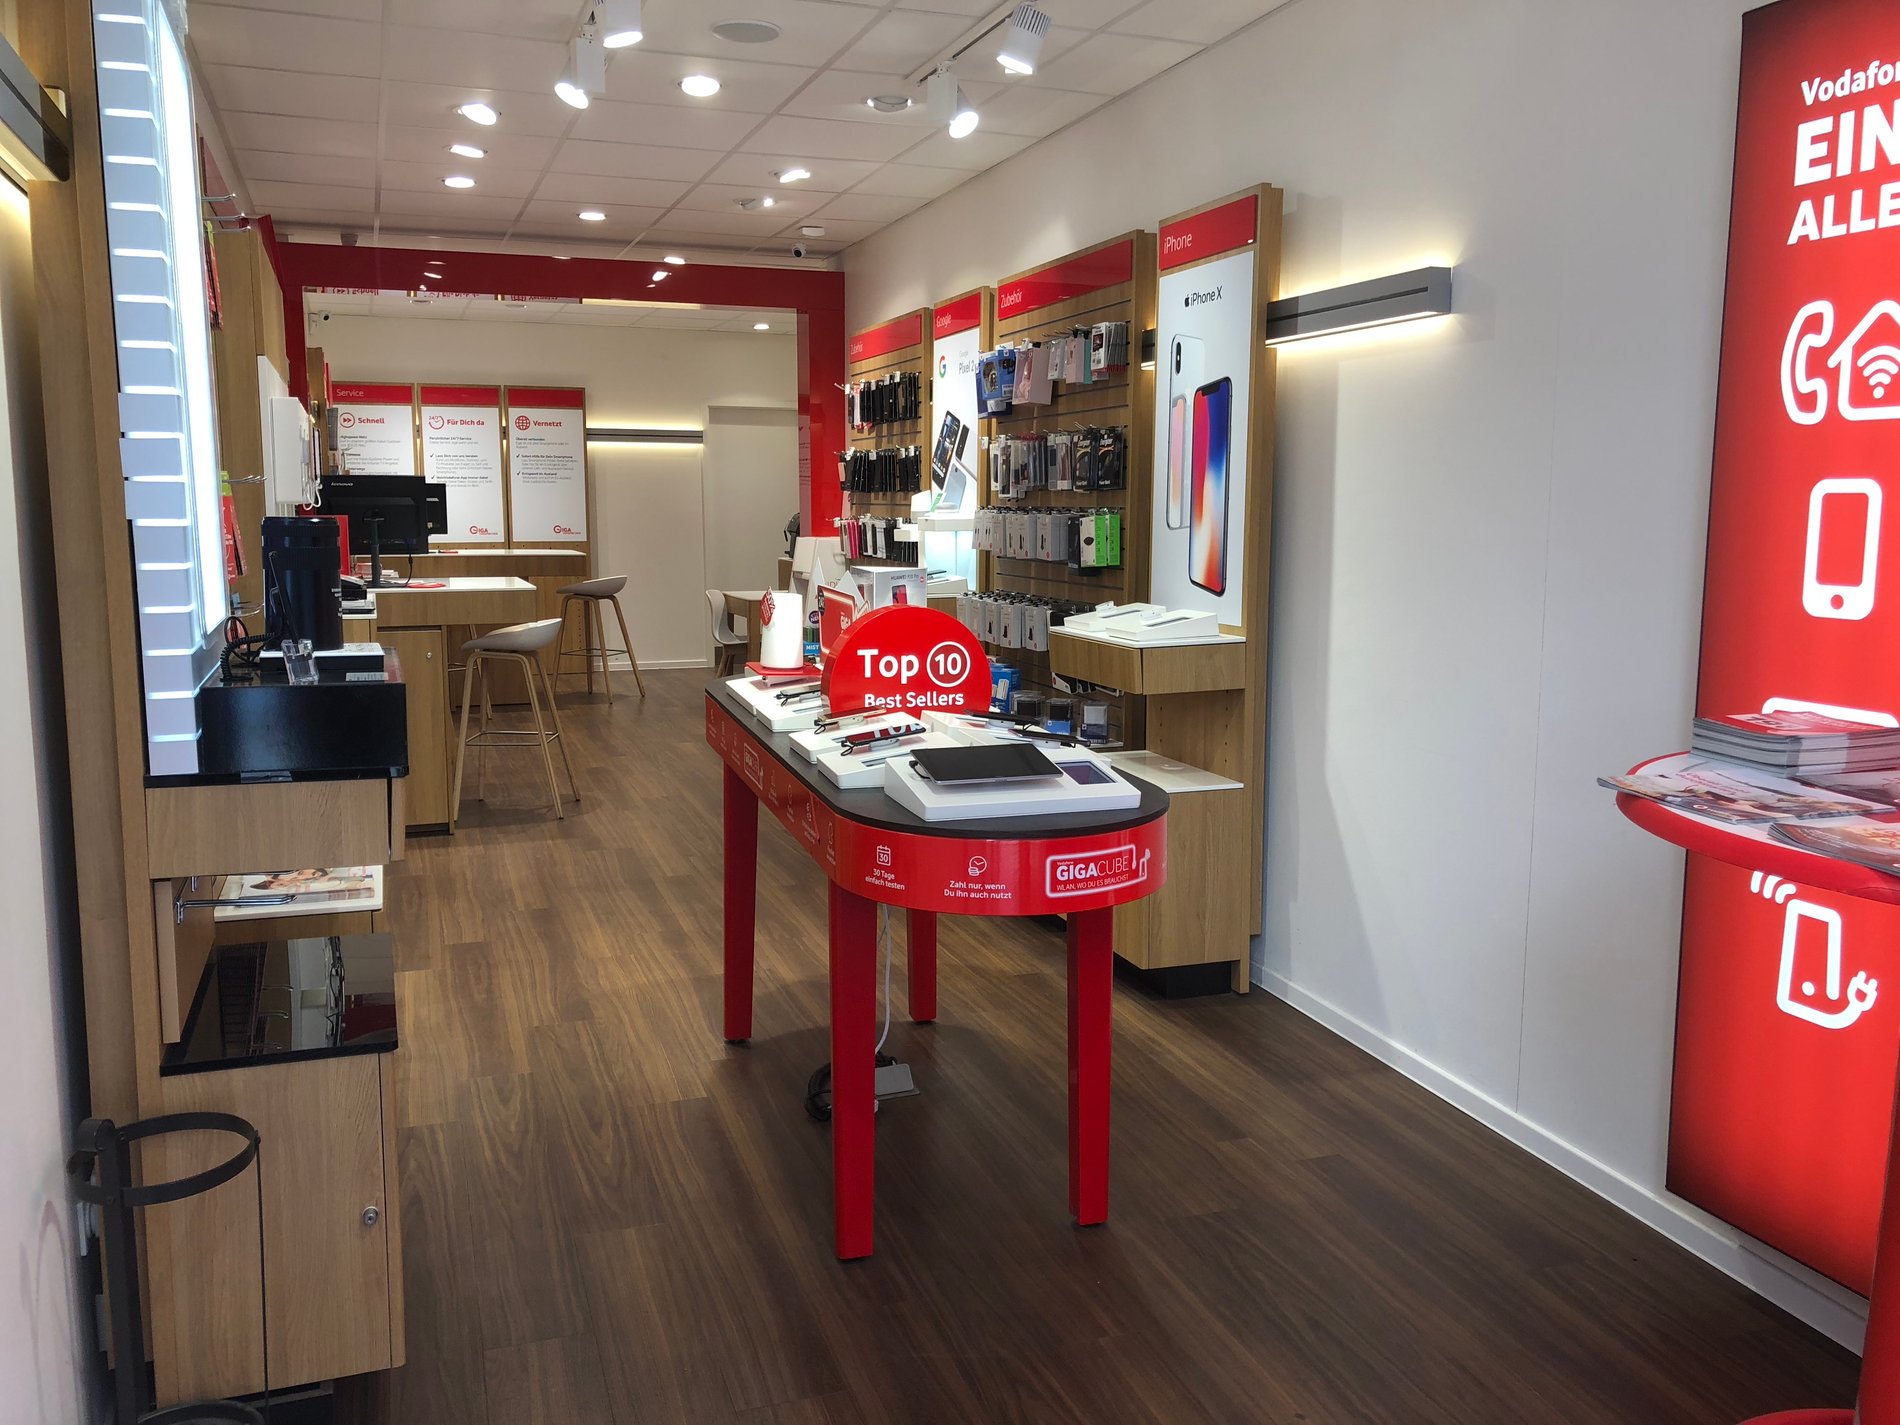 Vodafone-Shop in Trier, Brotstr. 4